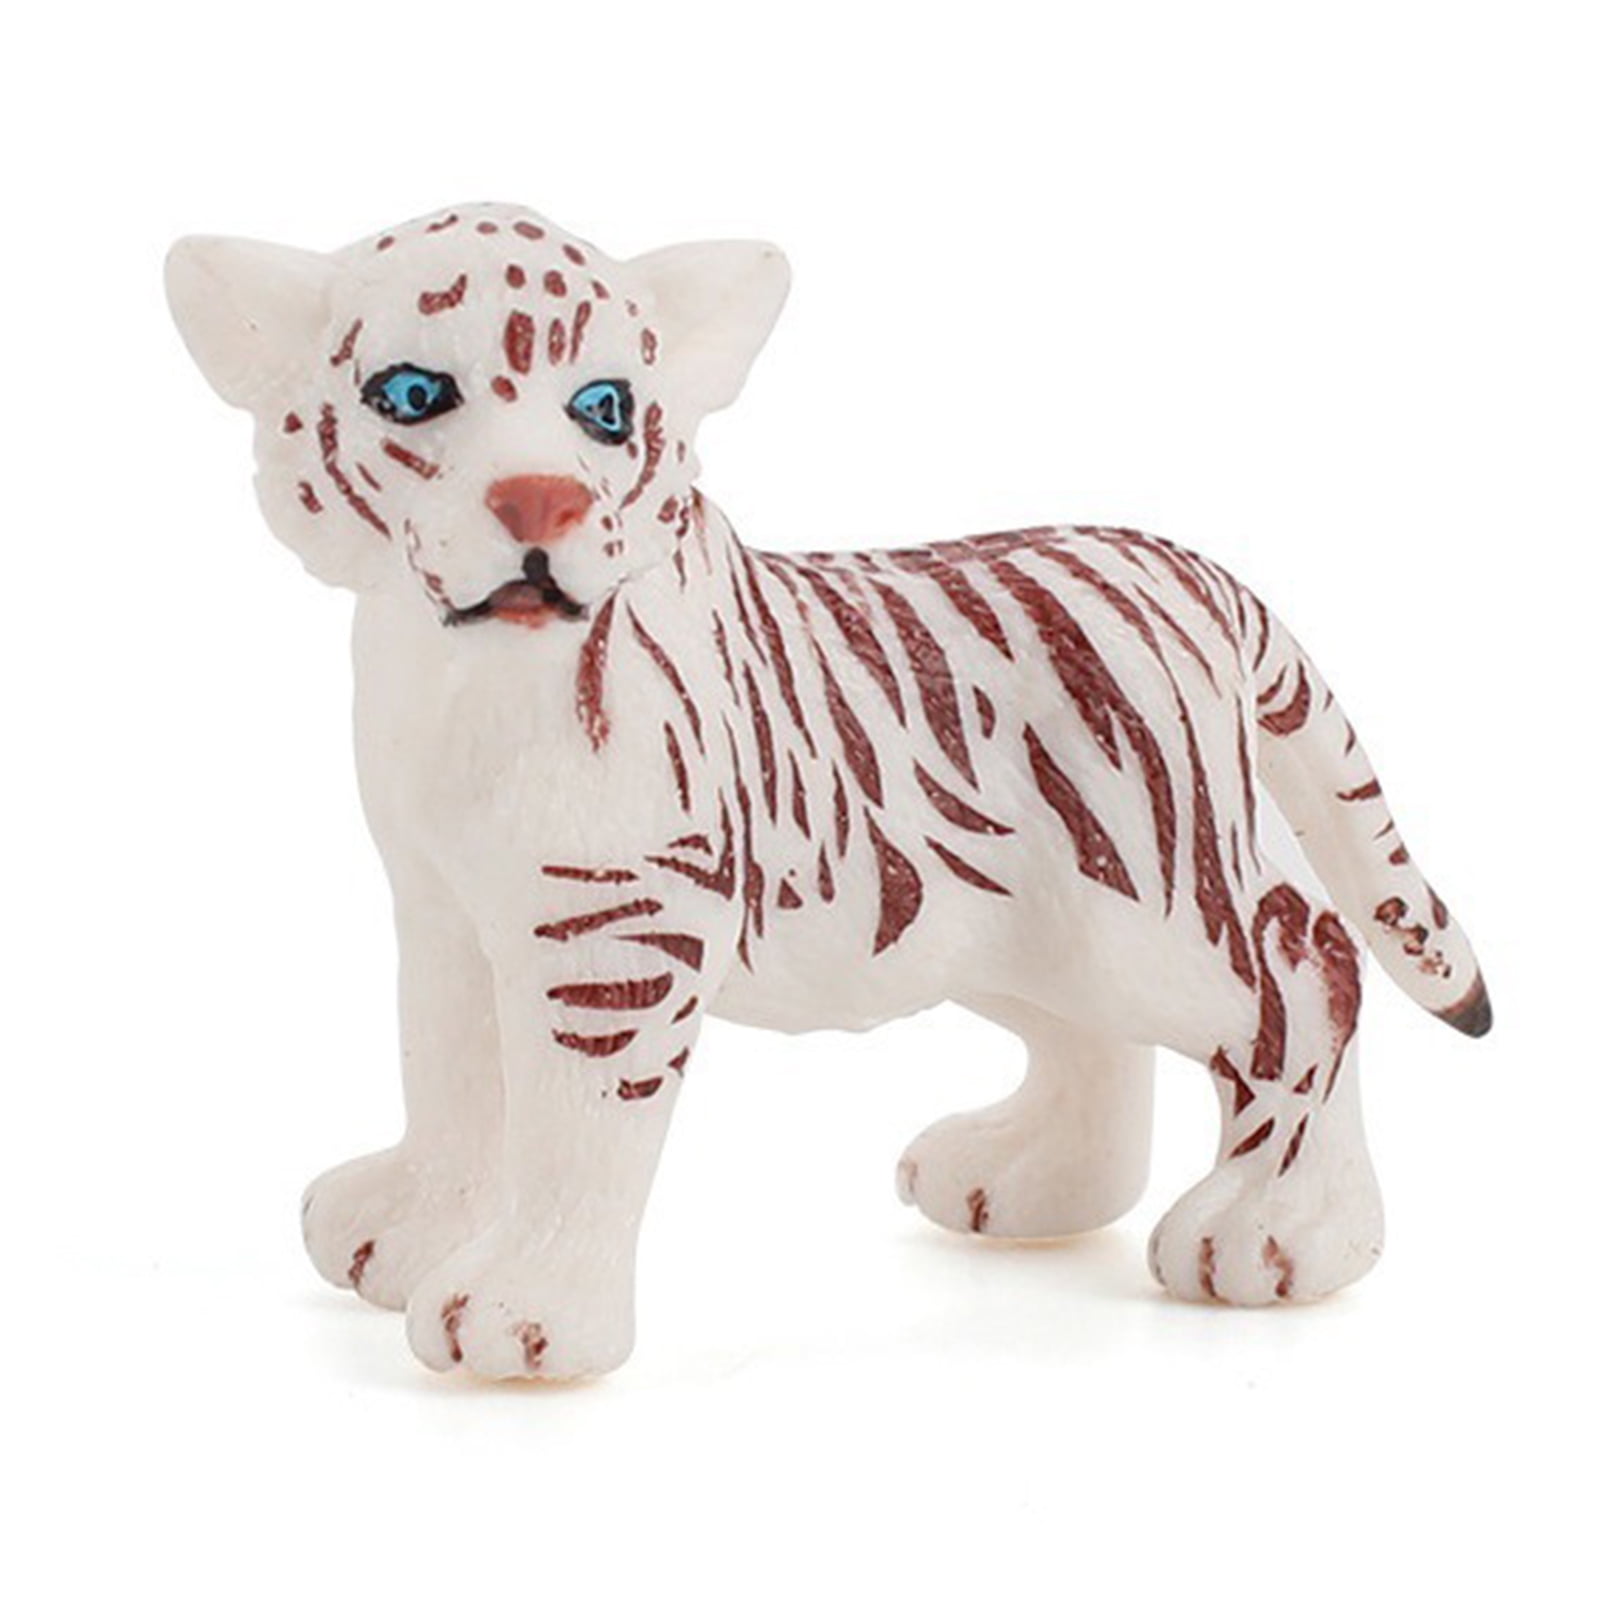 Fashion Simulation Wild Animal Tiger Model Kids Home Educational Toy Decor G 